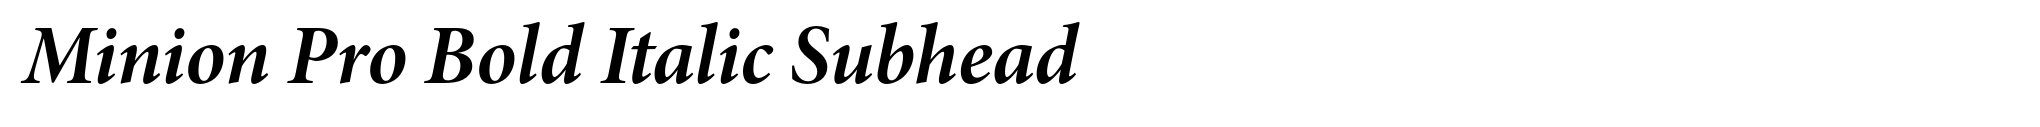 Minion Pro Bold Italic Subhead image